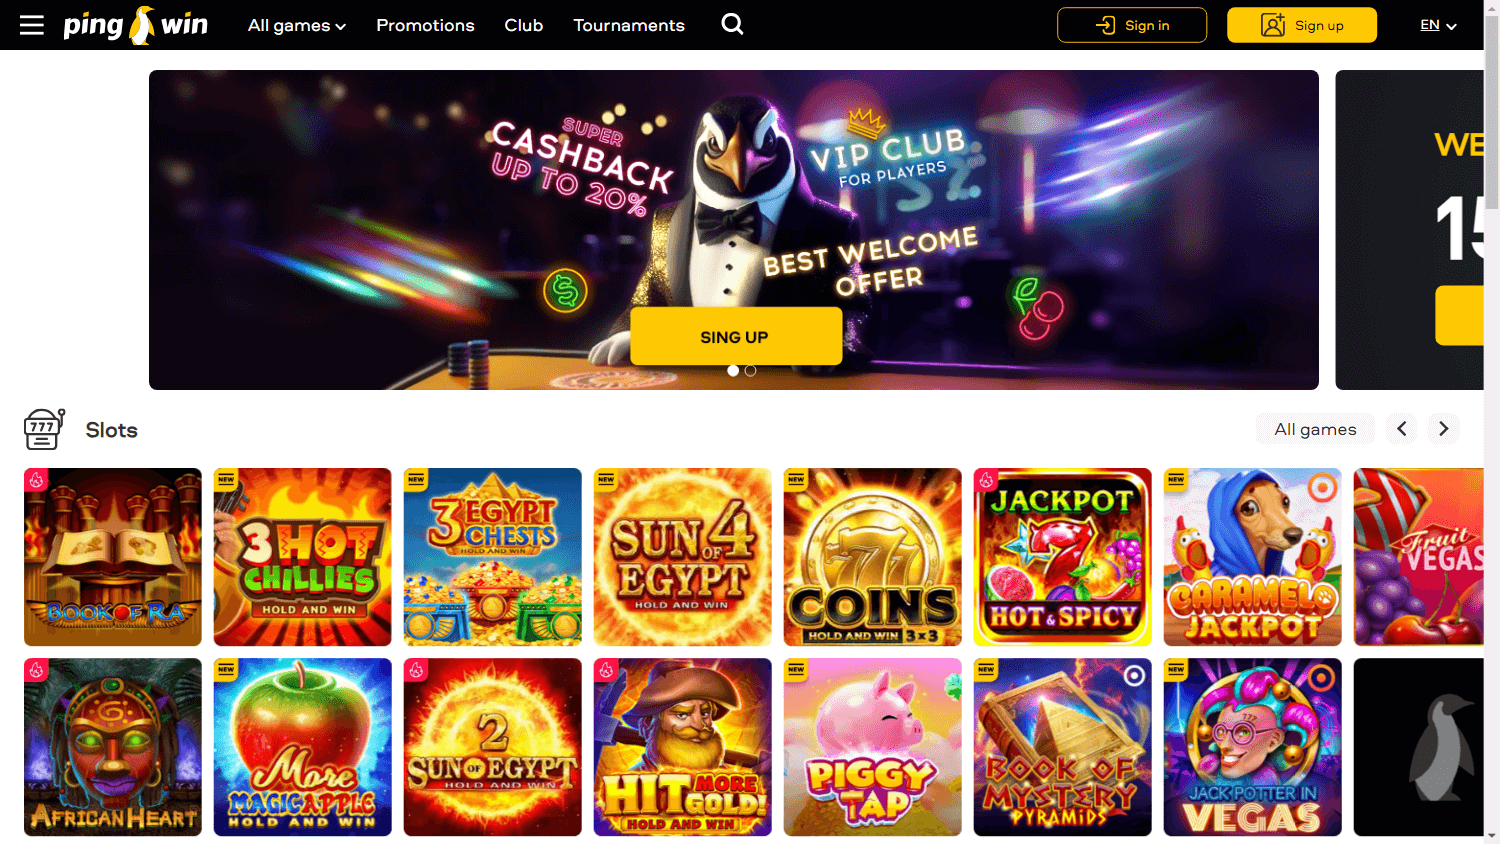 pingwin_casino_homepage_desktop